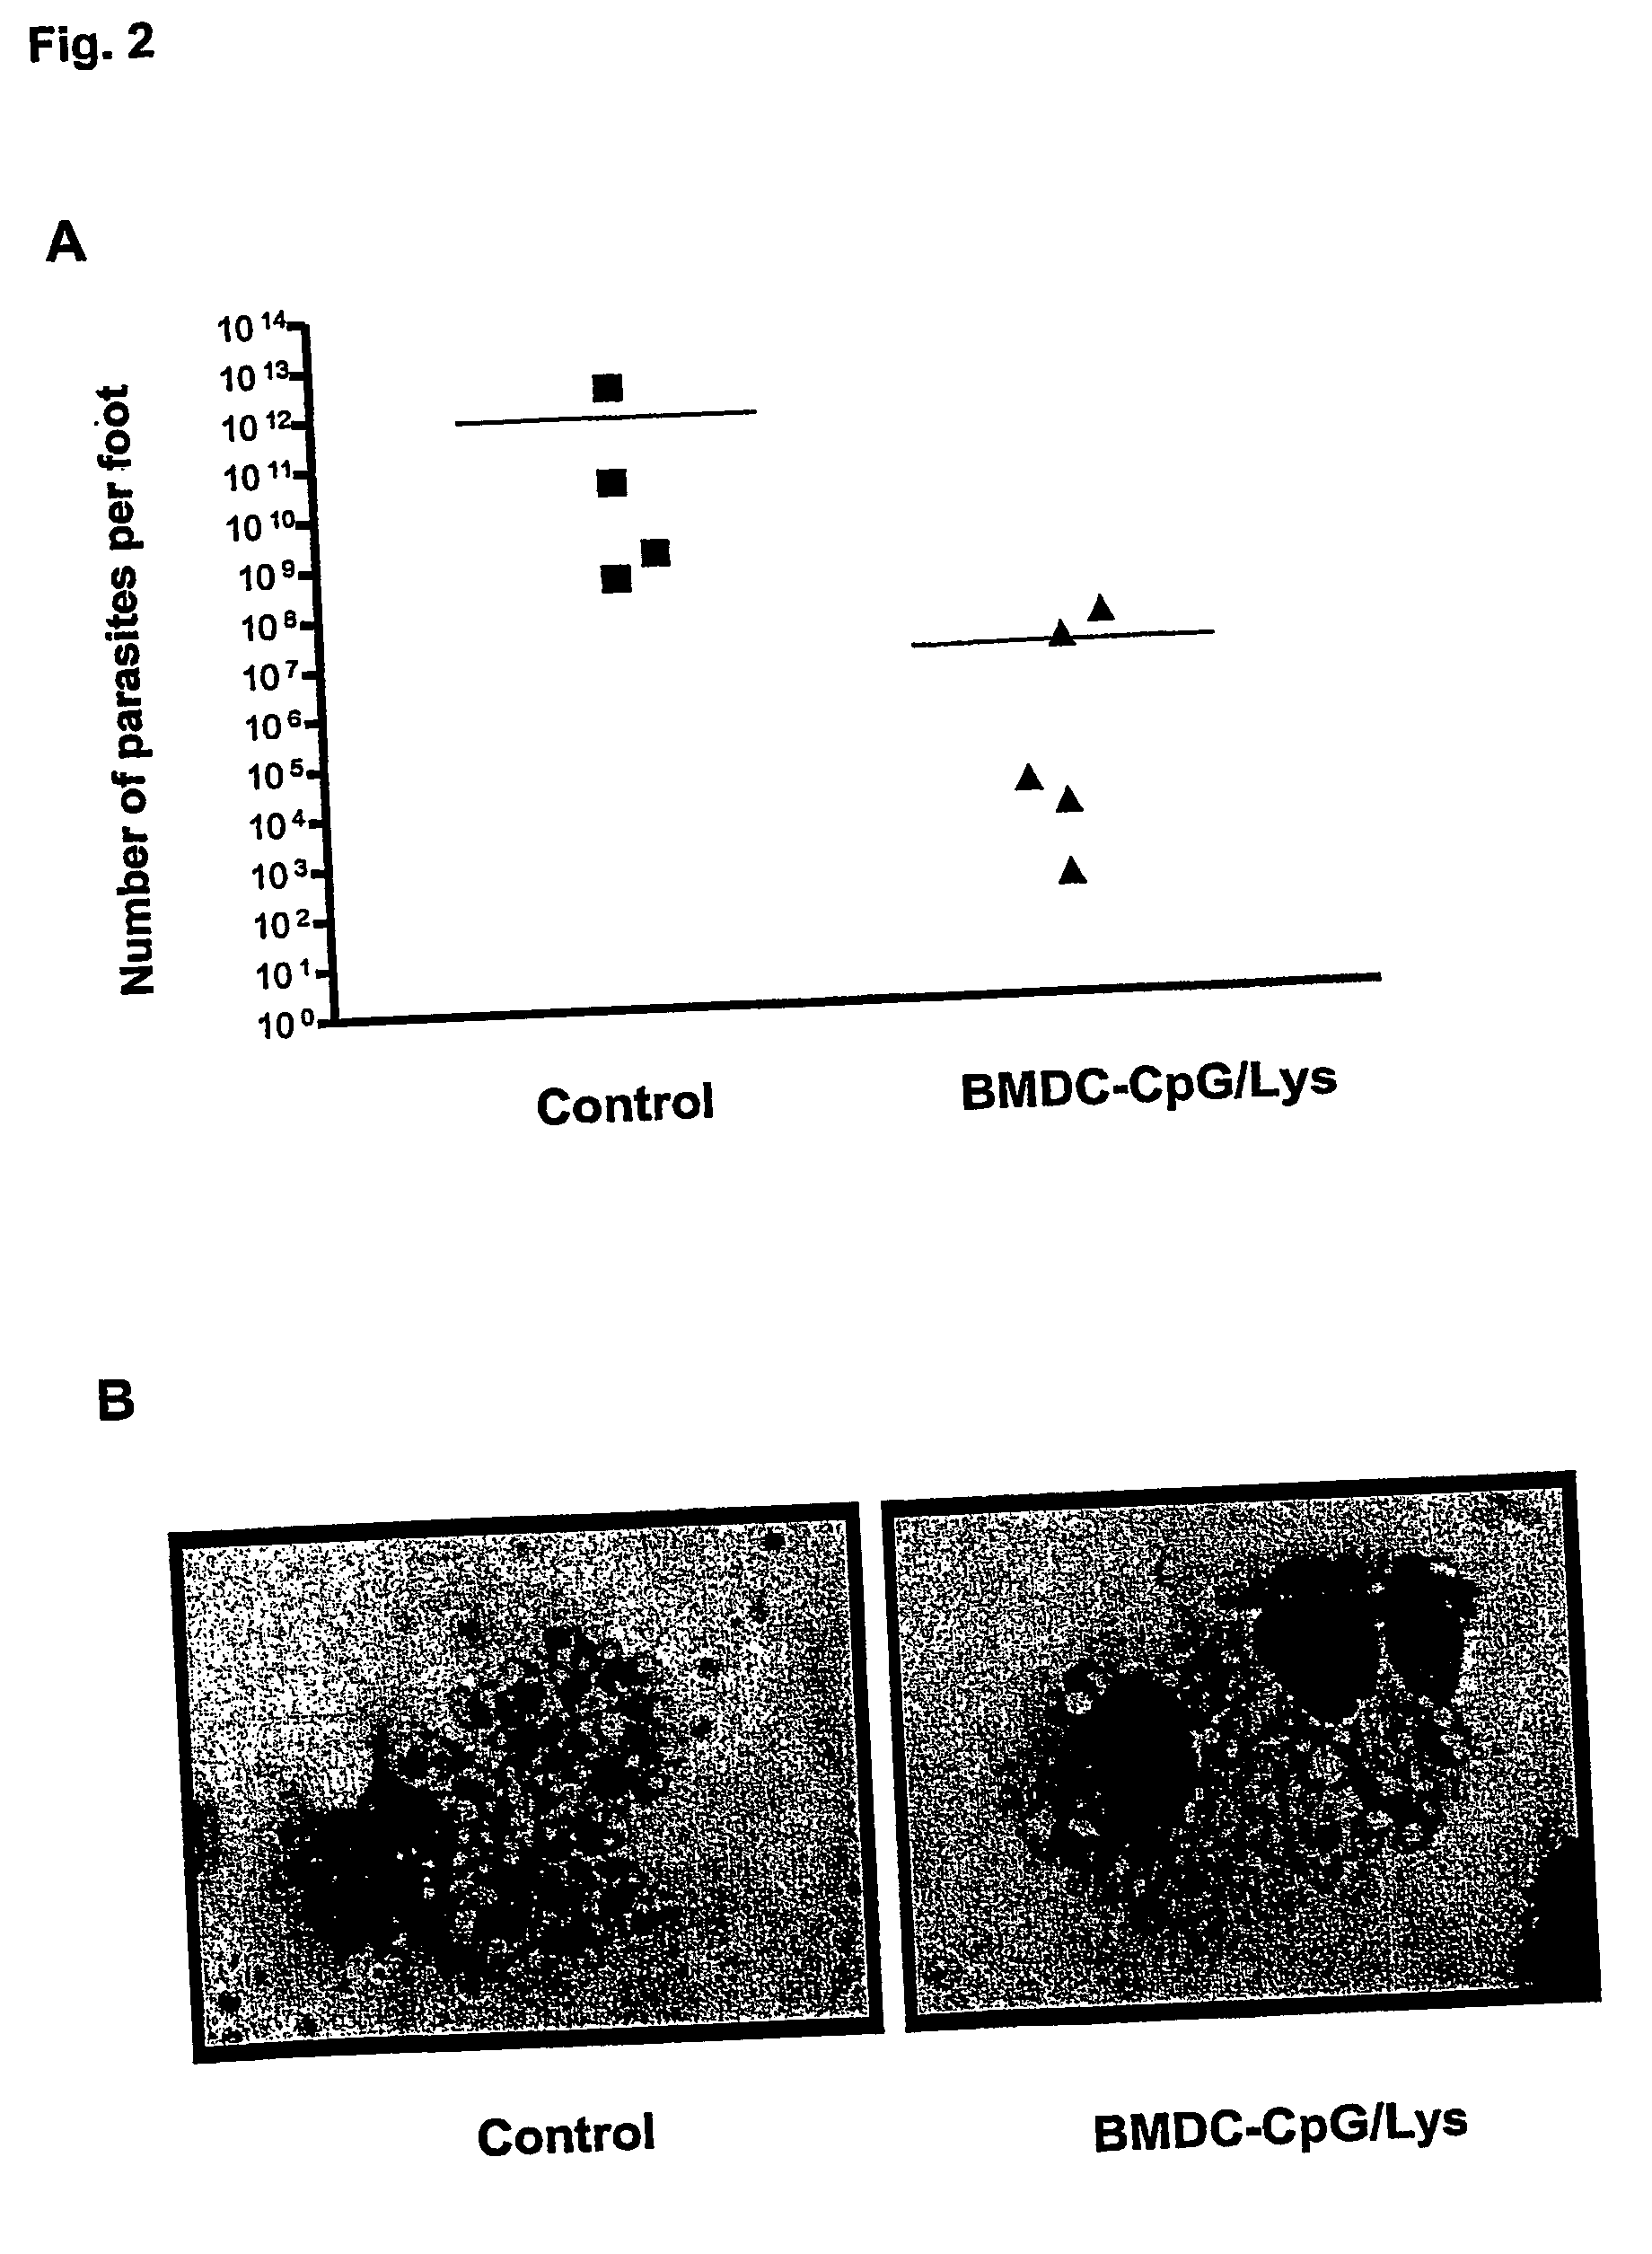 Method for generating antigen-presenting cells